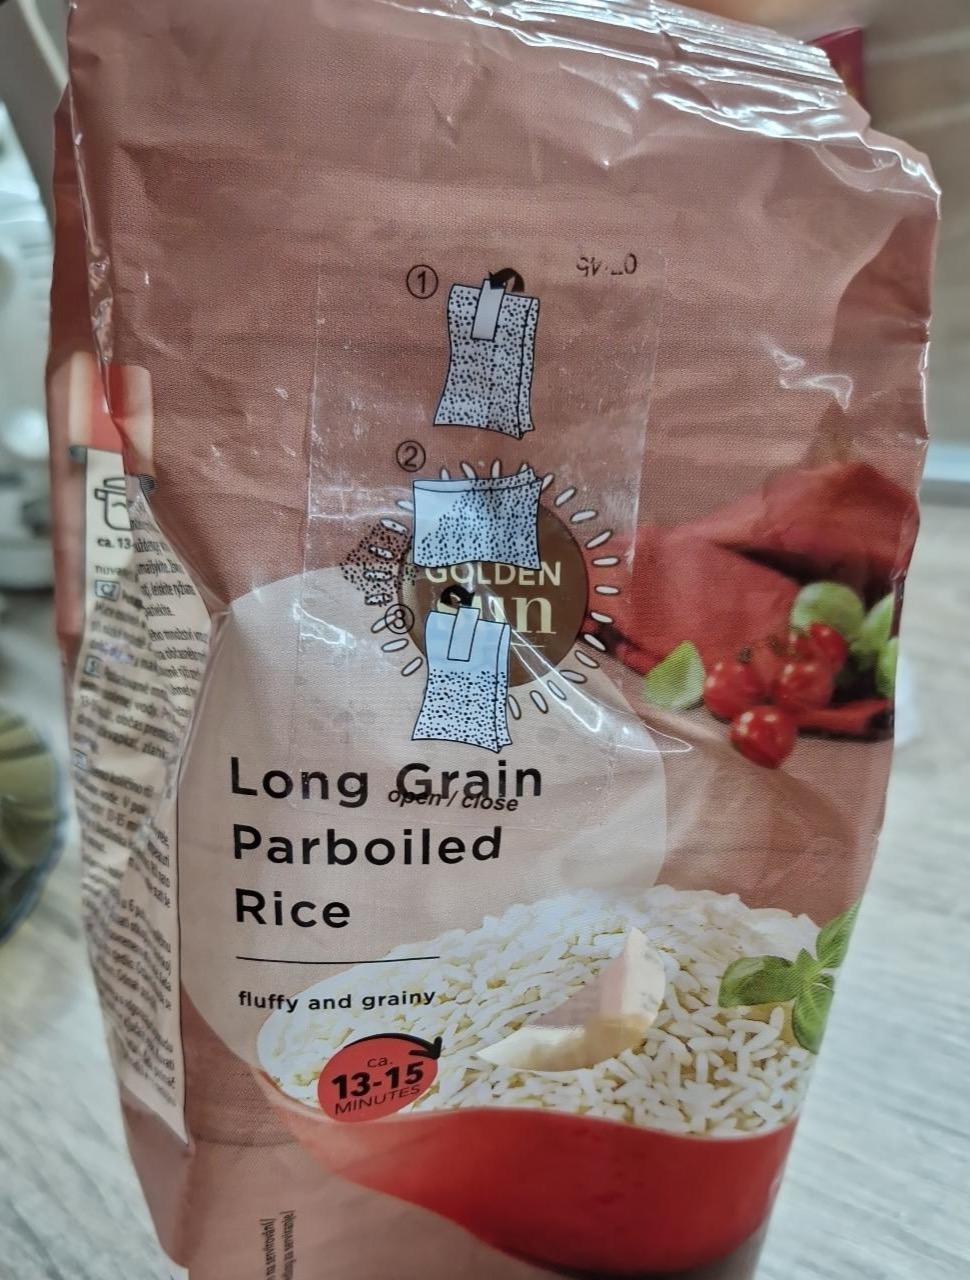 Képek - Long grain parboiled rice Golden sun